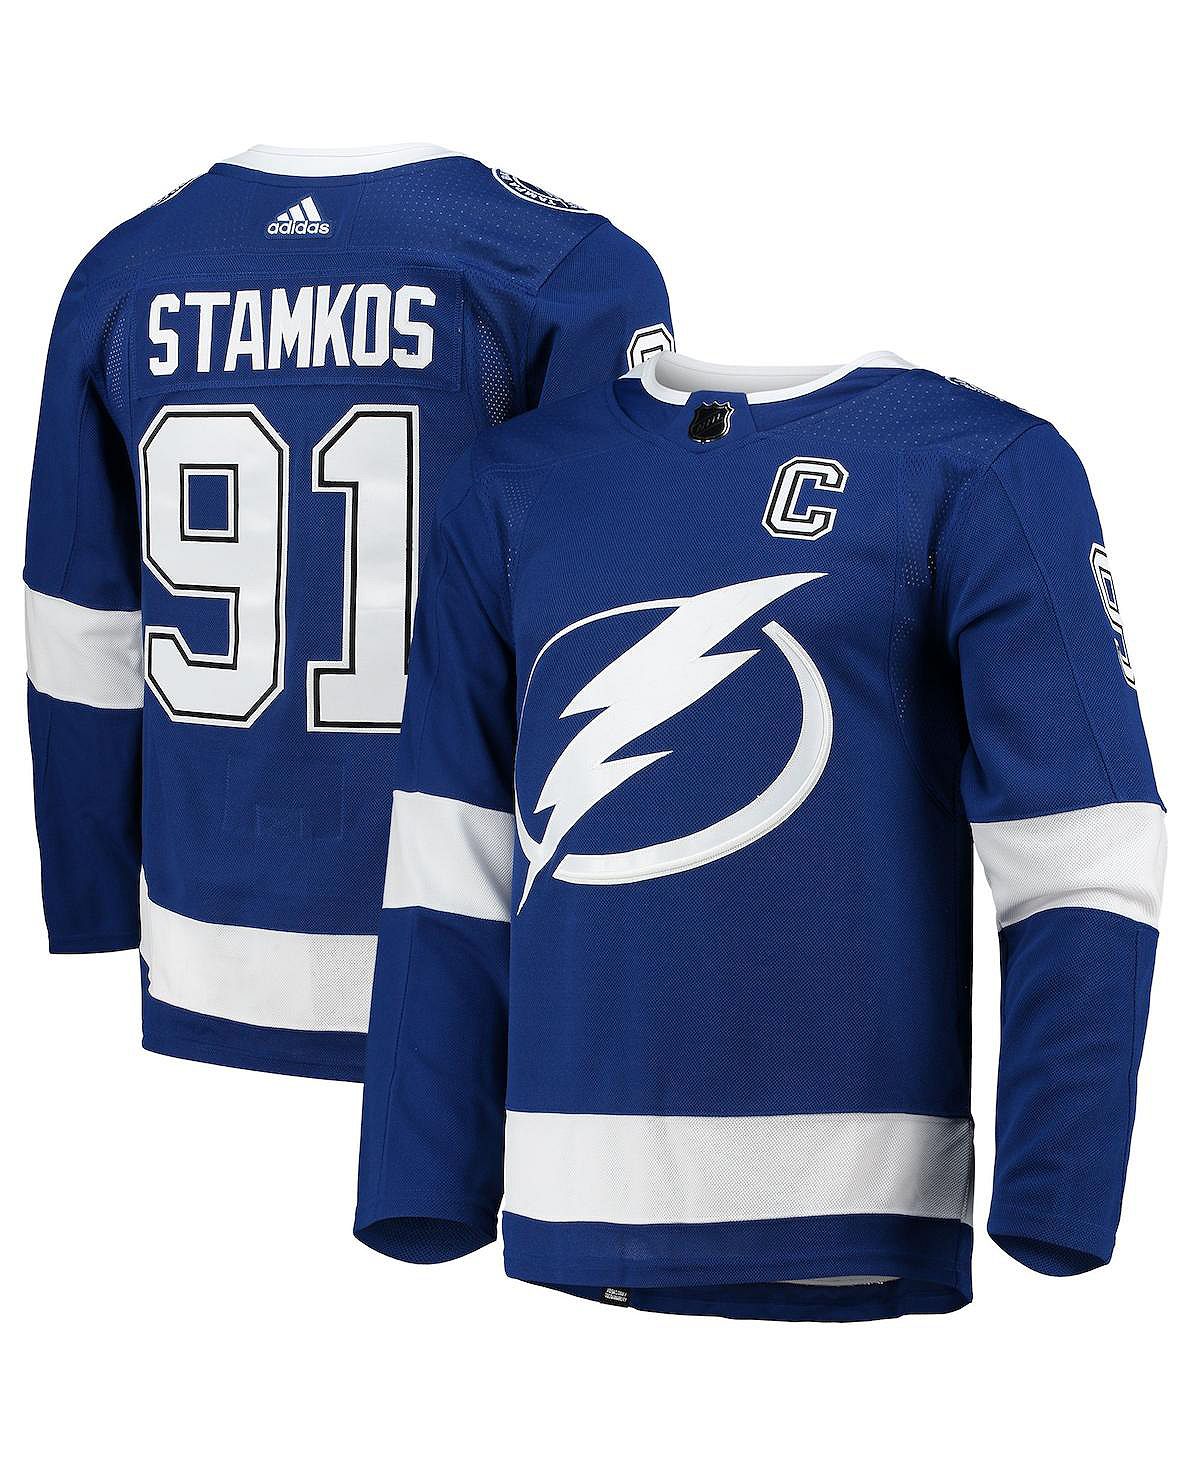 Мужская футболка steven stamkos blue tampa bay lightning home captain patch primegreen authentic pro player jersey adidas, синий футболка тампа бэй лайтнинг